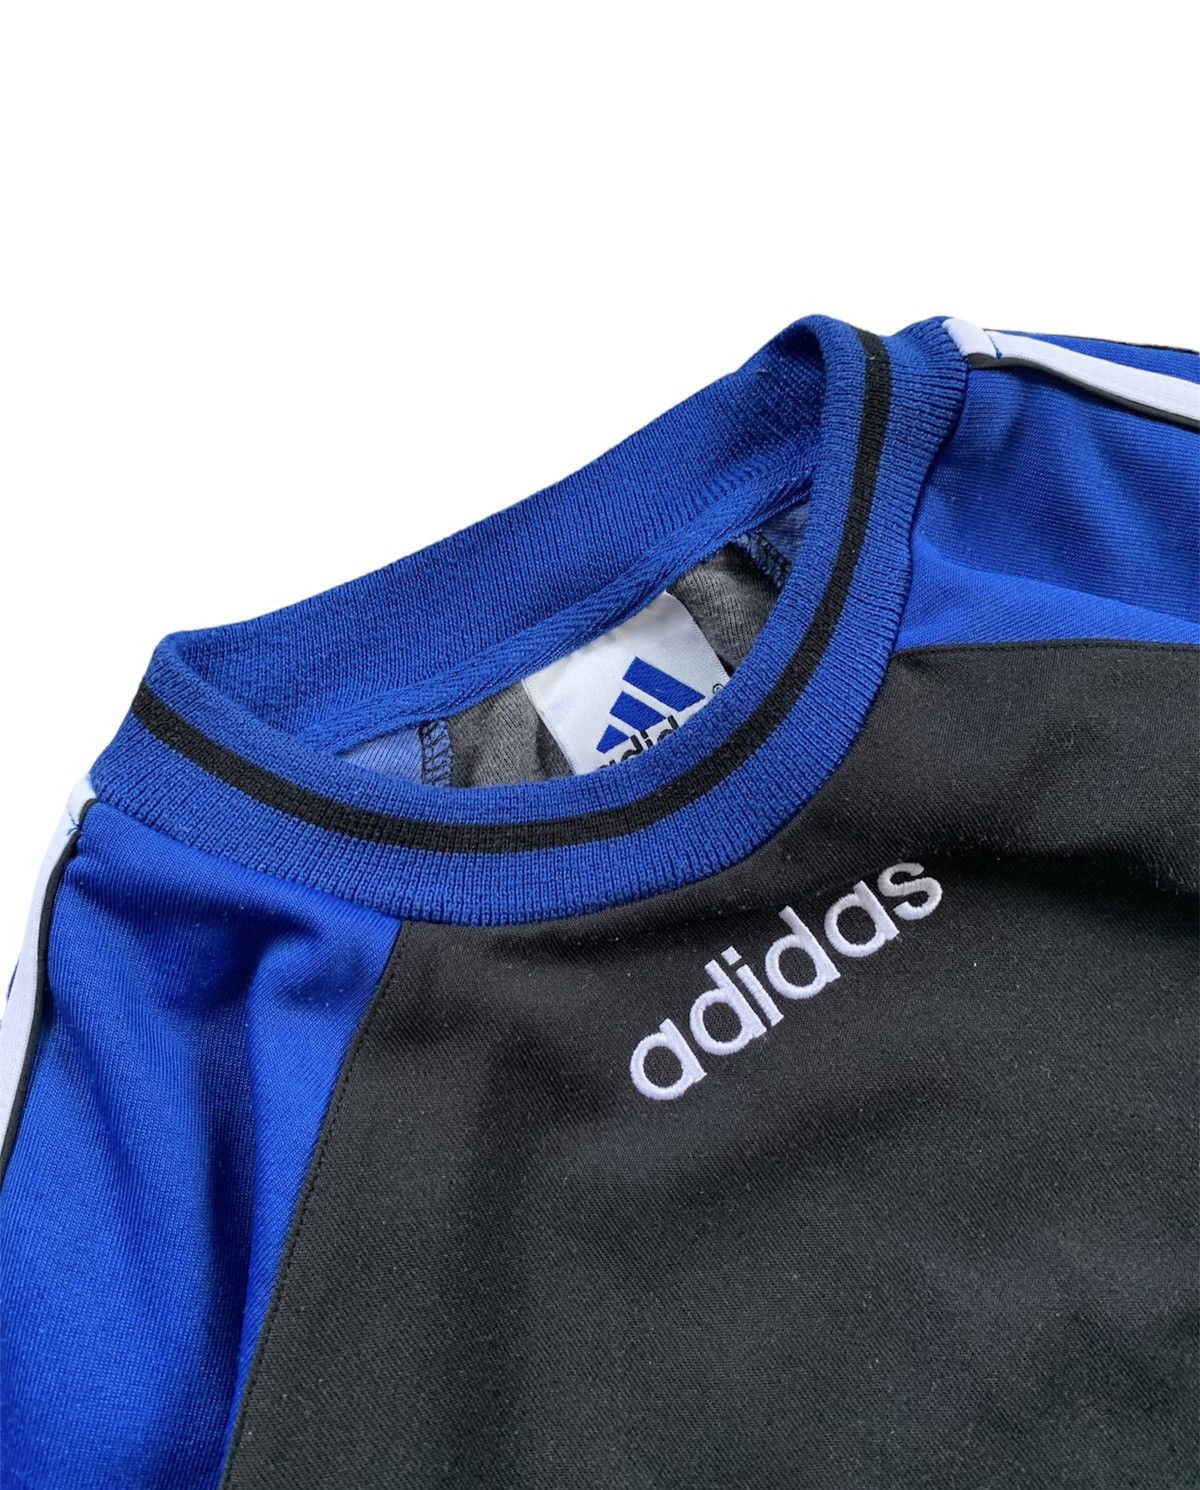 Adidas Adidas vintage sweatshirt crewneck small logo Size US M / EU 48-50 / 2 - 5 Thumbnail